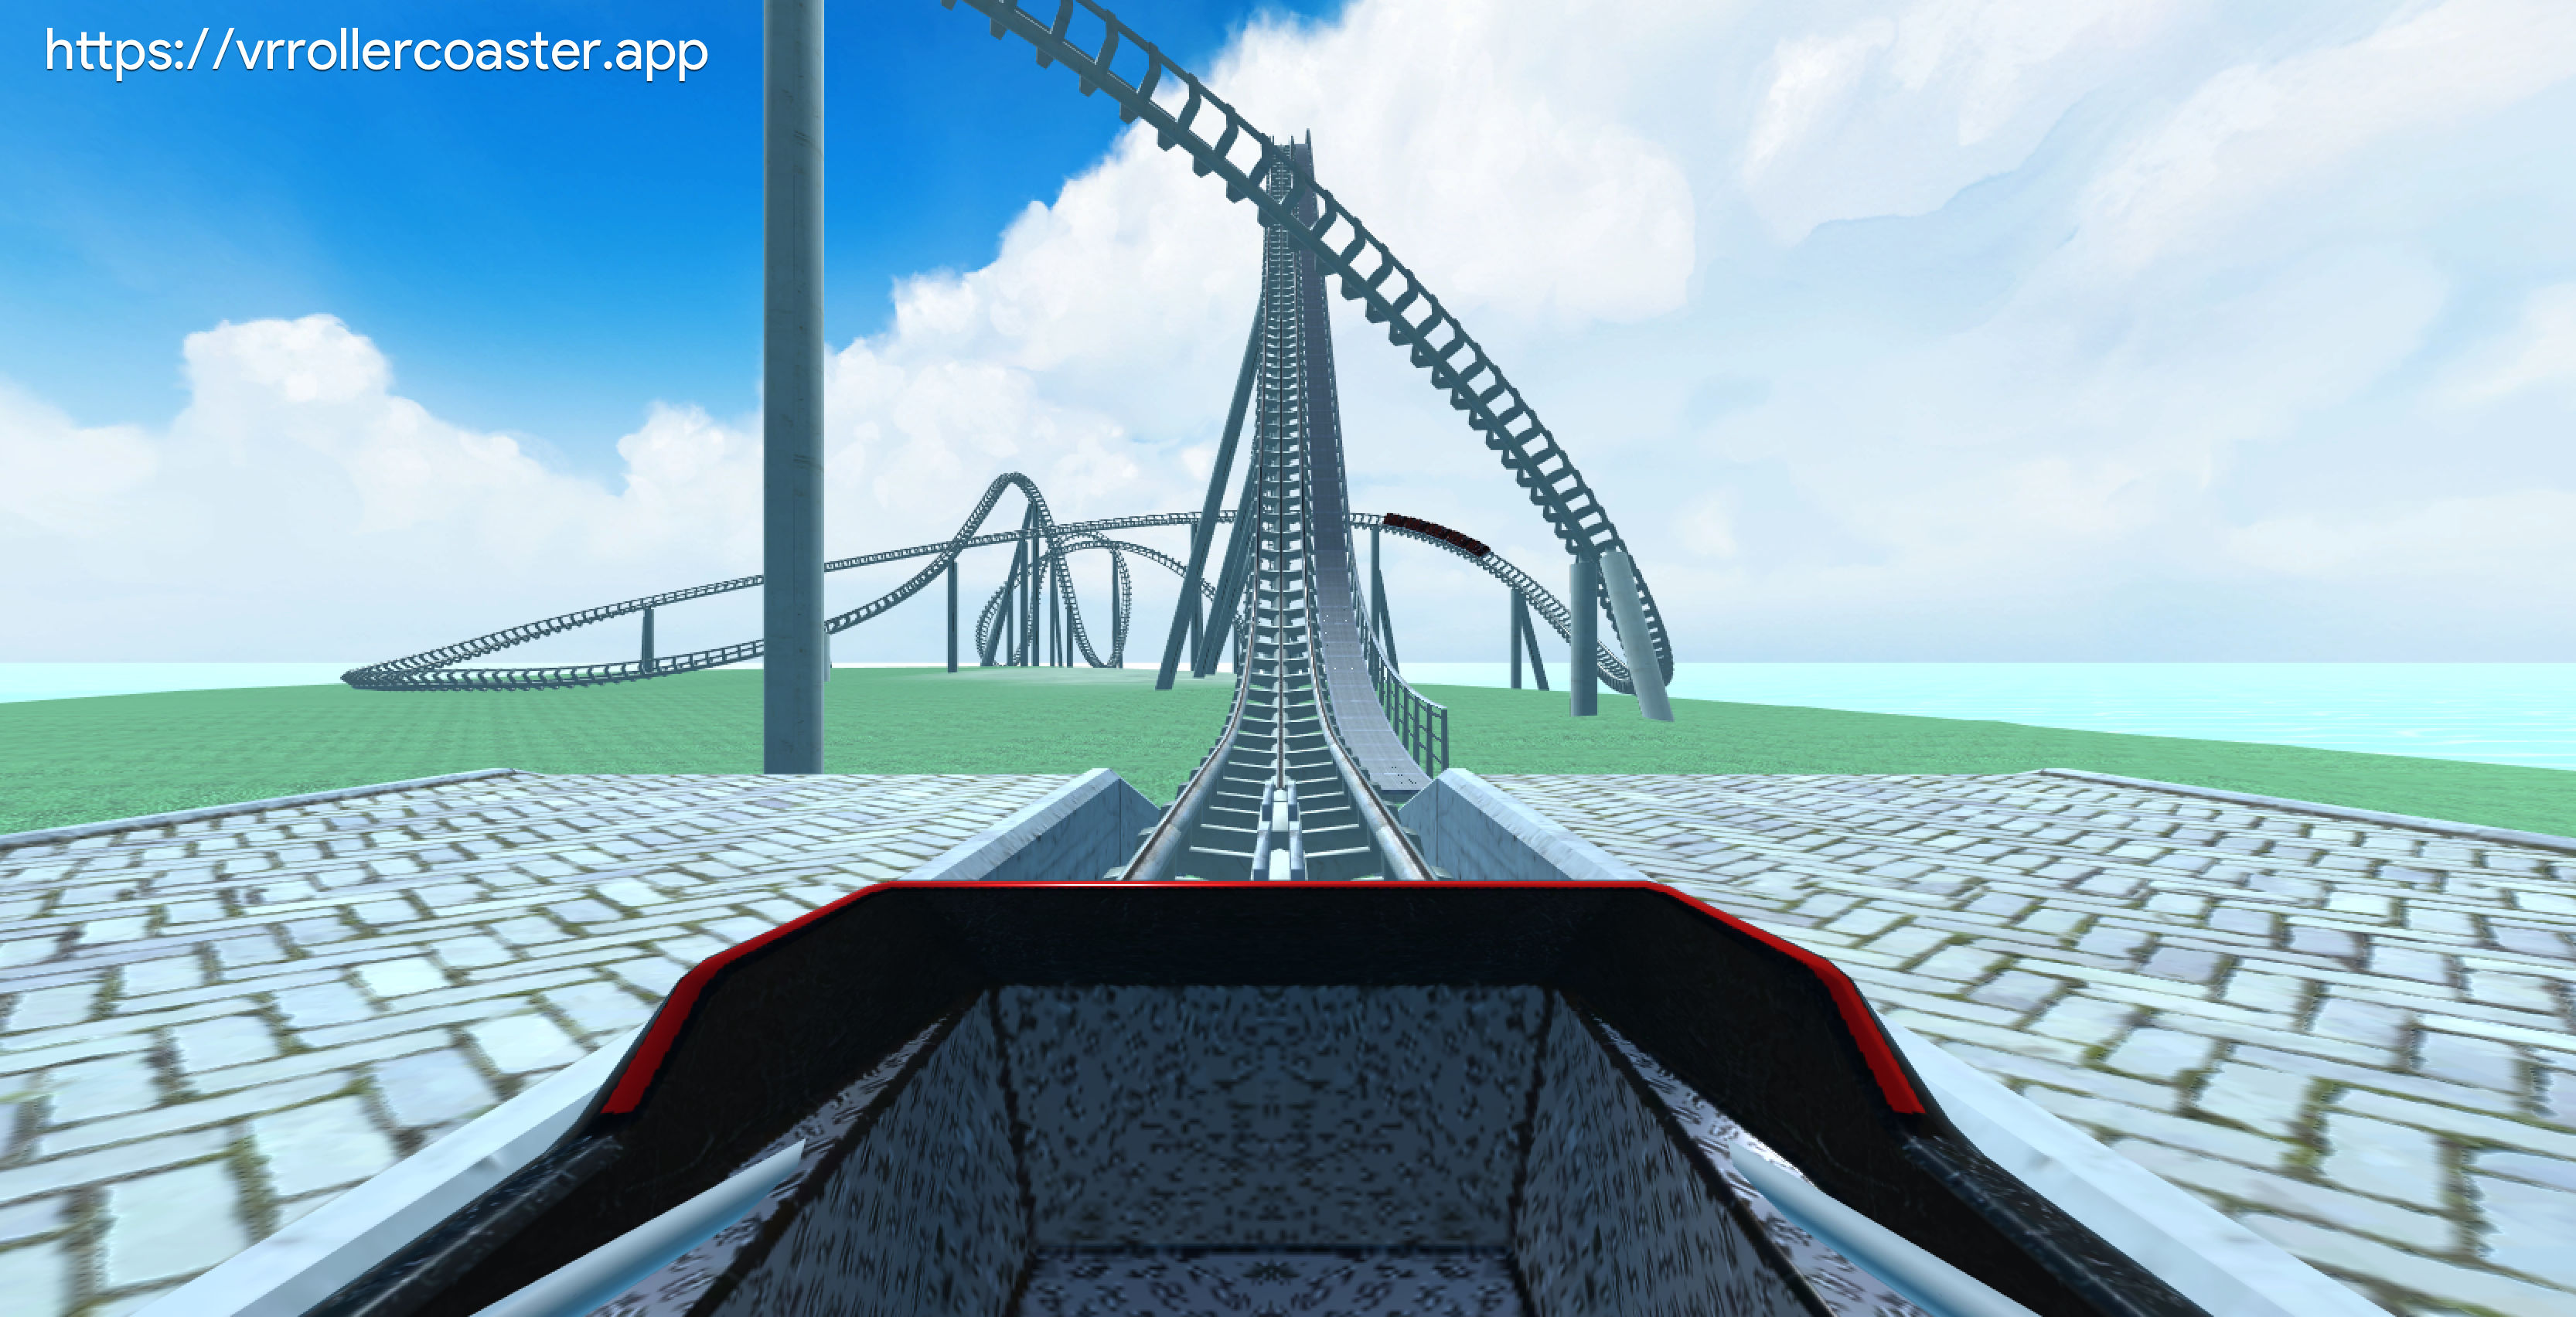 virtual-reality-rollercoaster-screenshot.png